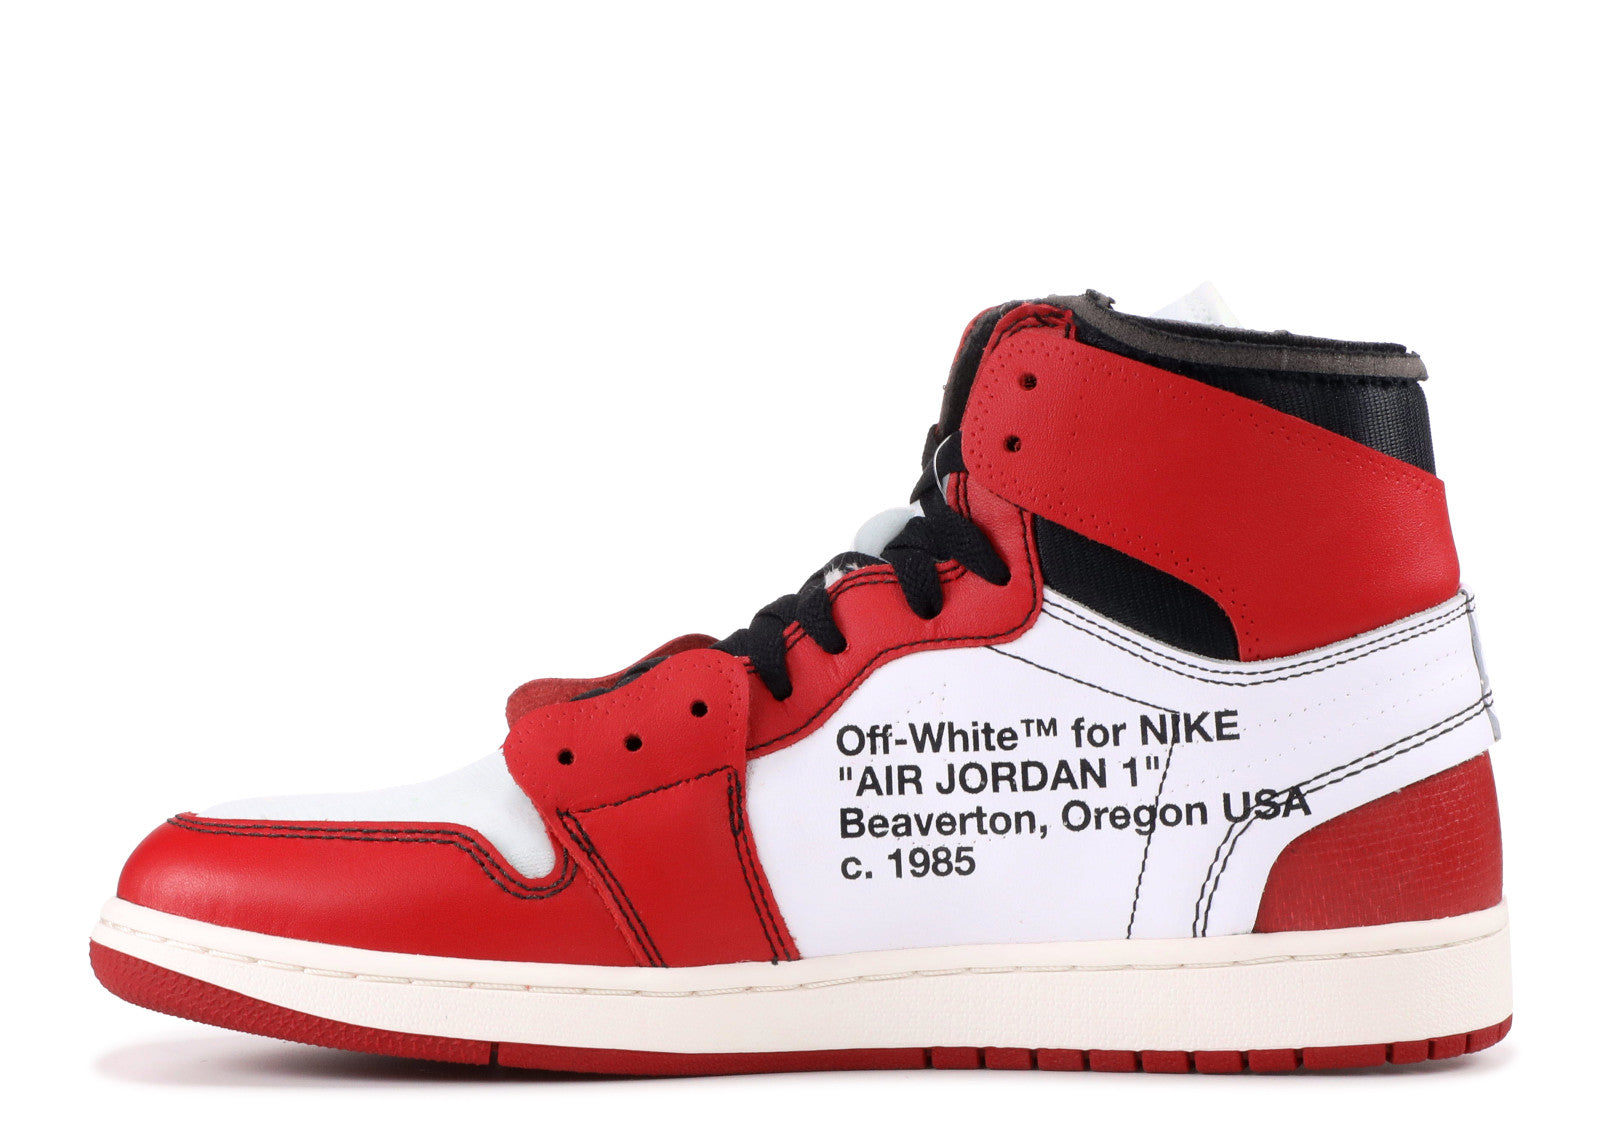 Off-White X Nike Air Jordan 1 'The Ten'